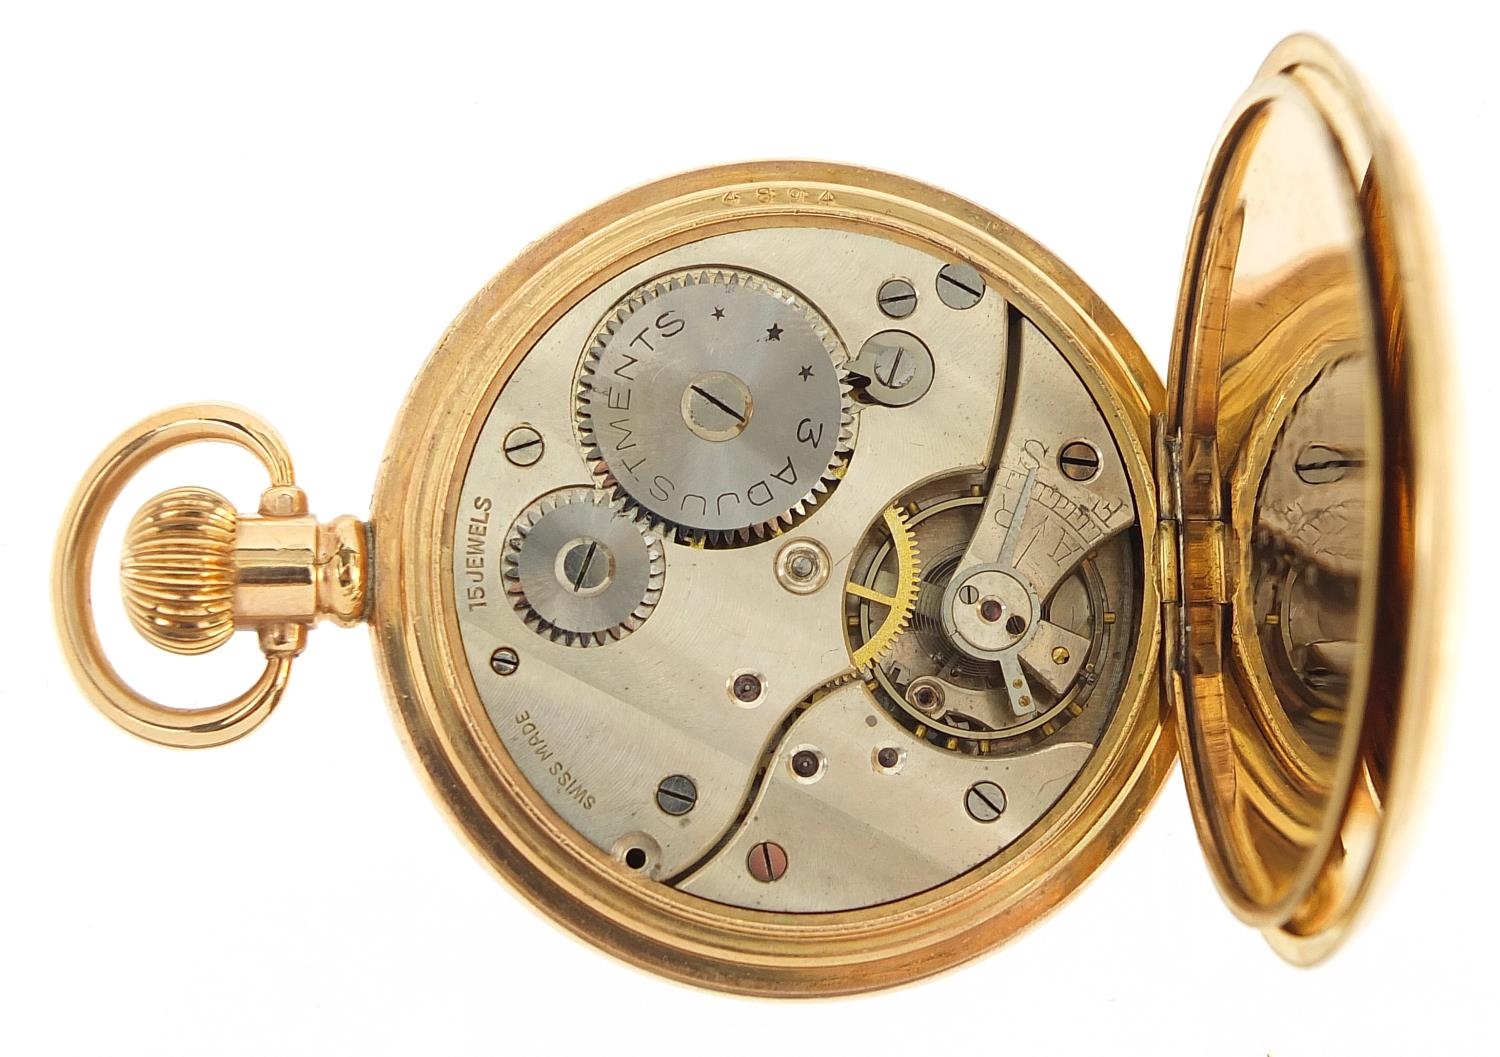 Gentlemen's gold plated half hunter pocket watch with enamelled dial, 50mm in diameter - Image 4 of 6